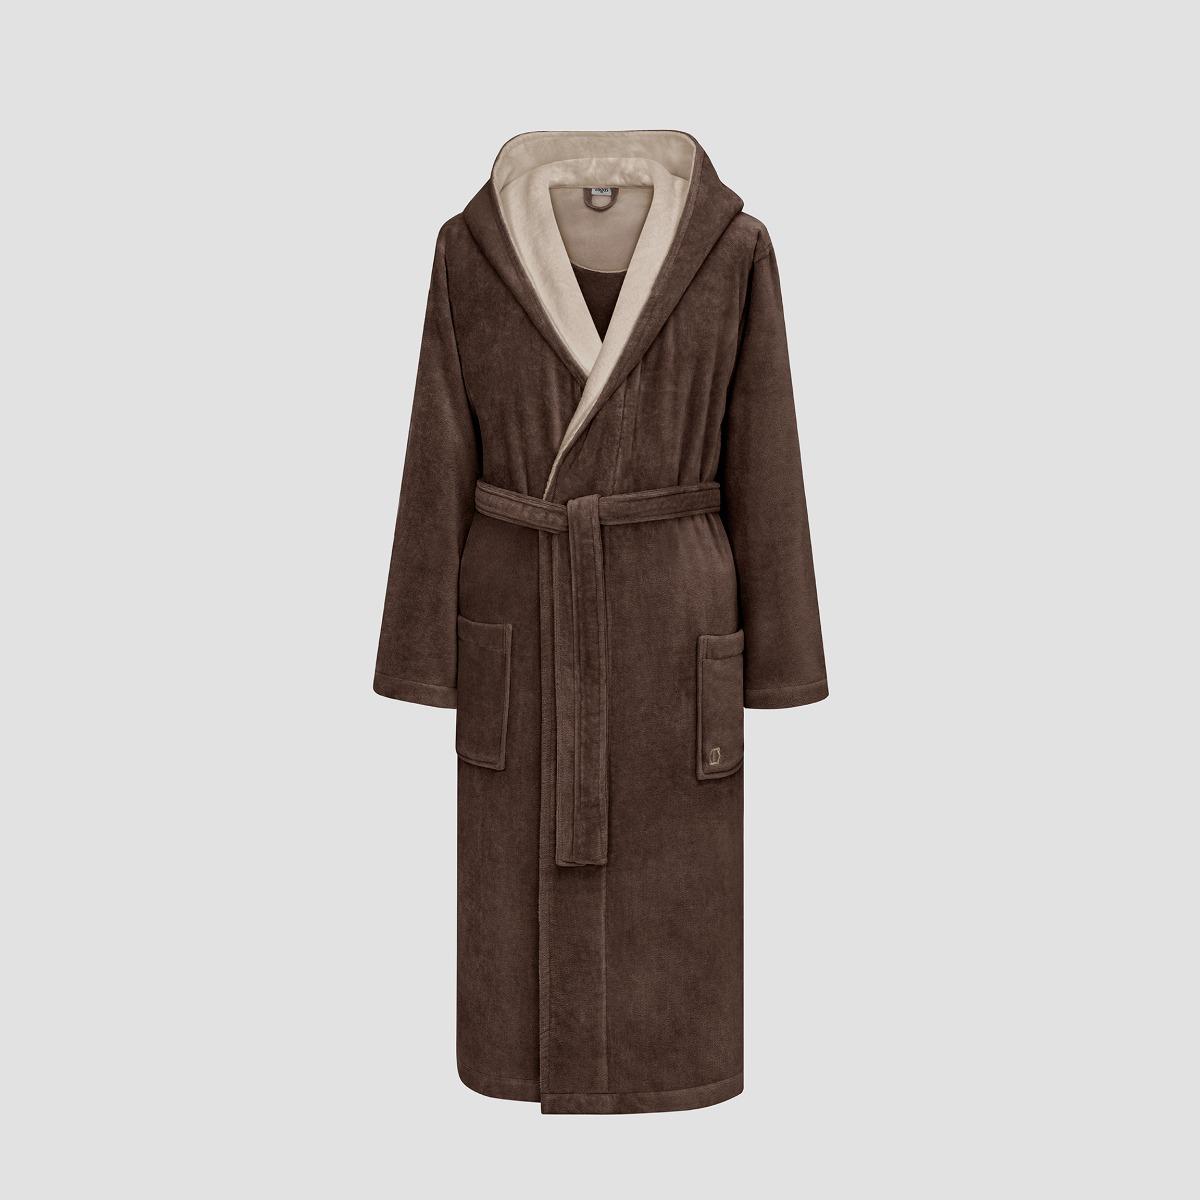 Халат Togas Арт Лайн коричневый с бежевым L(50) халат togas арт лайн серый с белым м 48